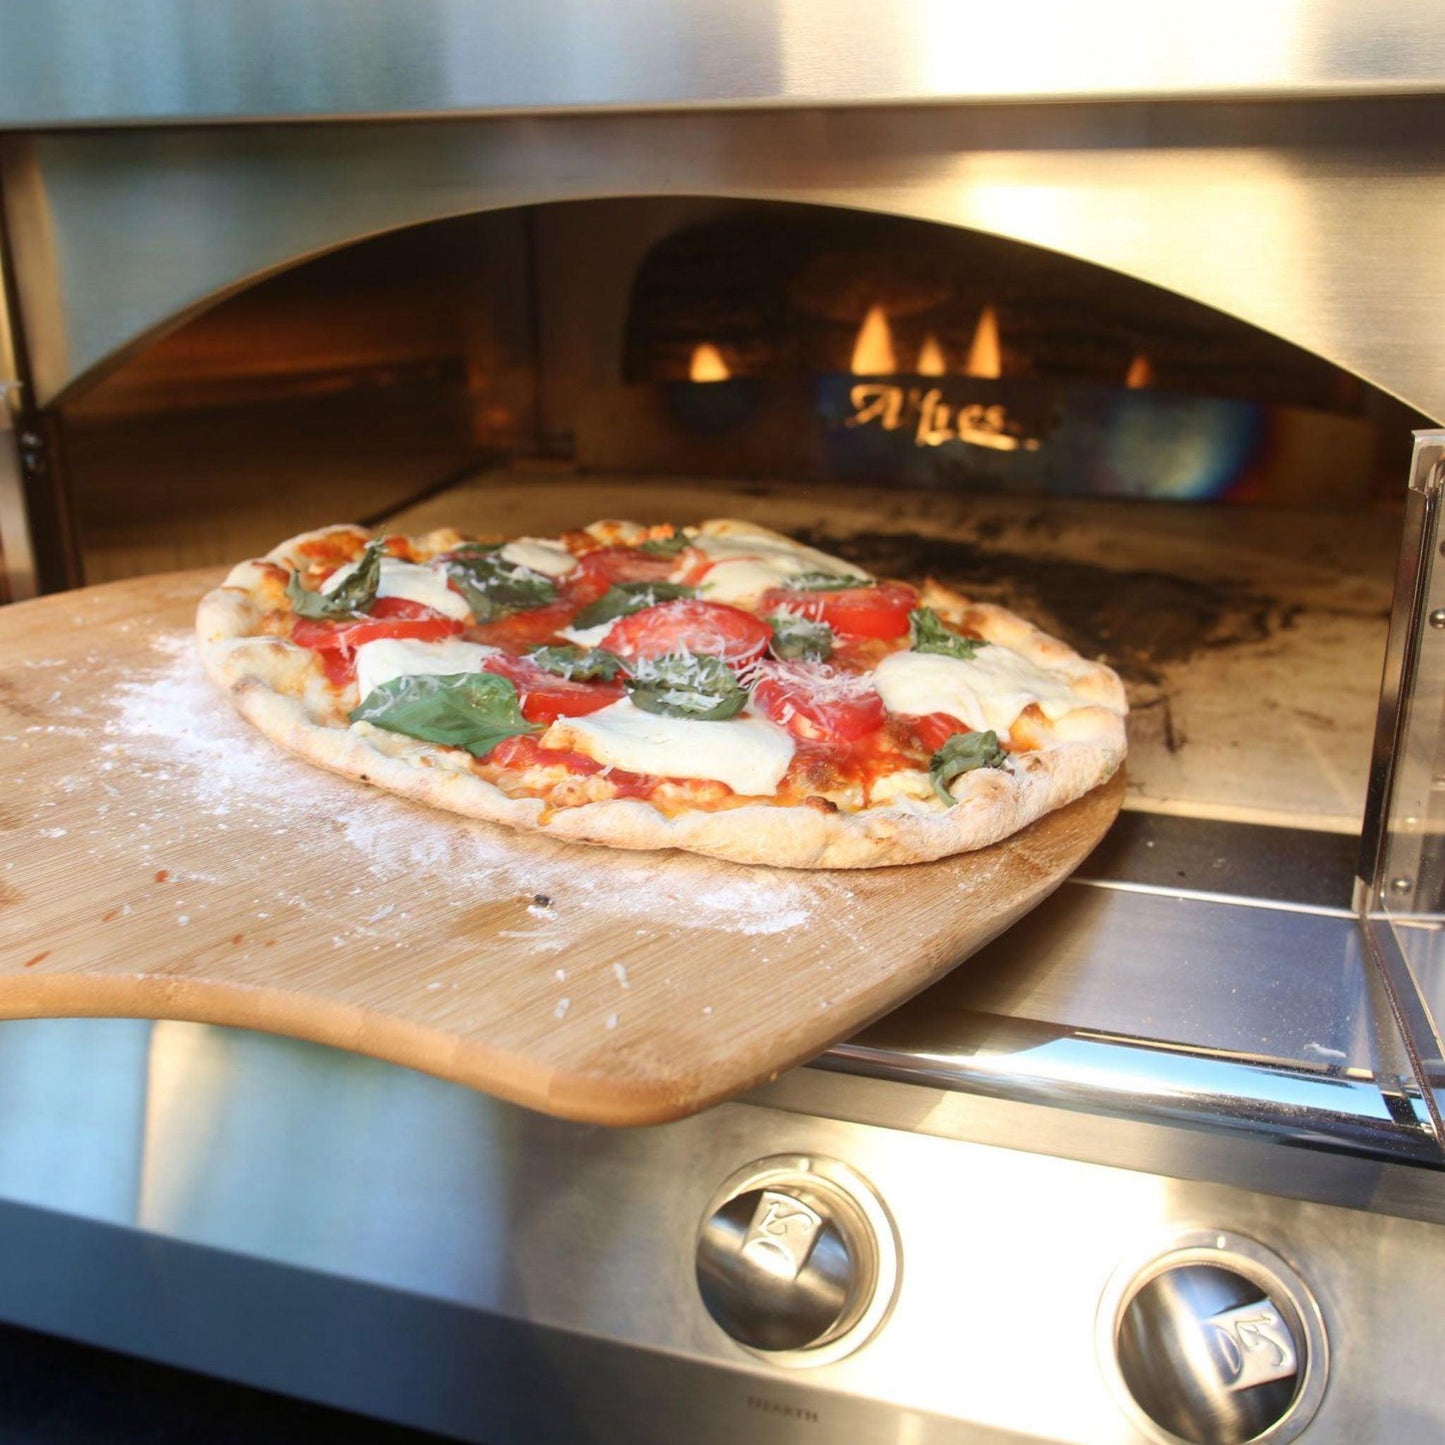 Alfresco 30" Signal Grey Gloss Liquid Propane Pizza Oven for Countertop Mounting